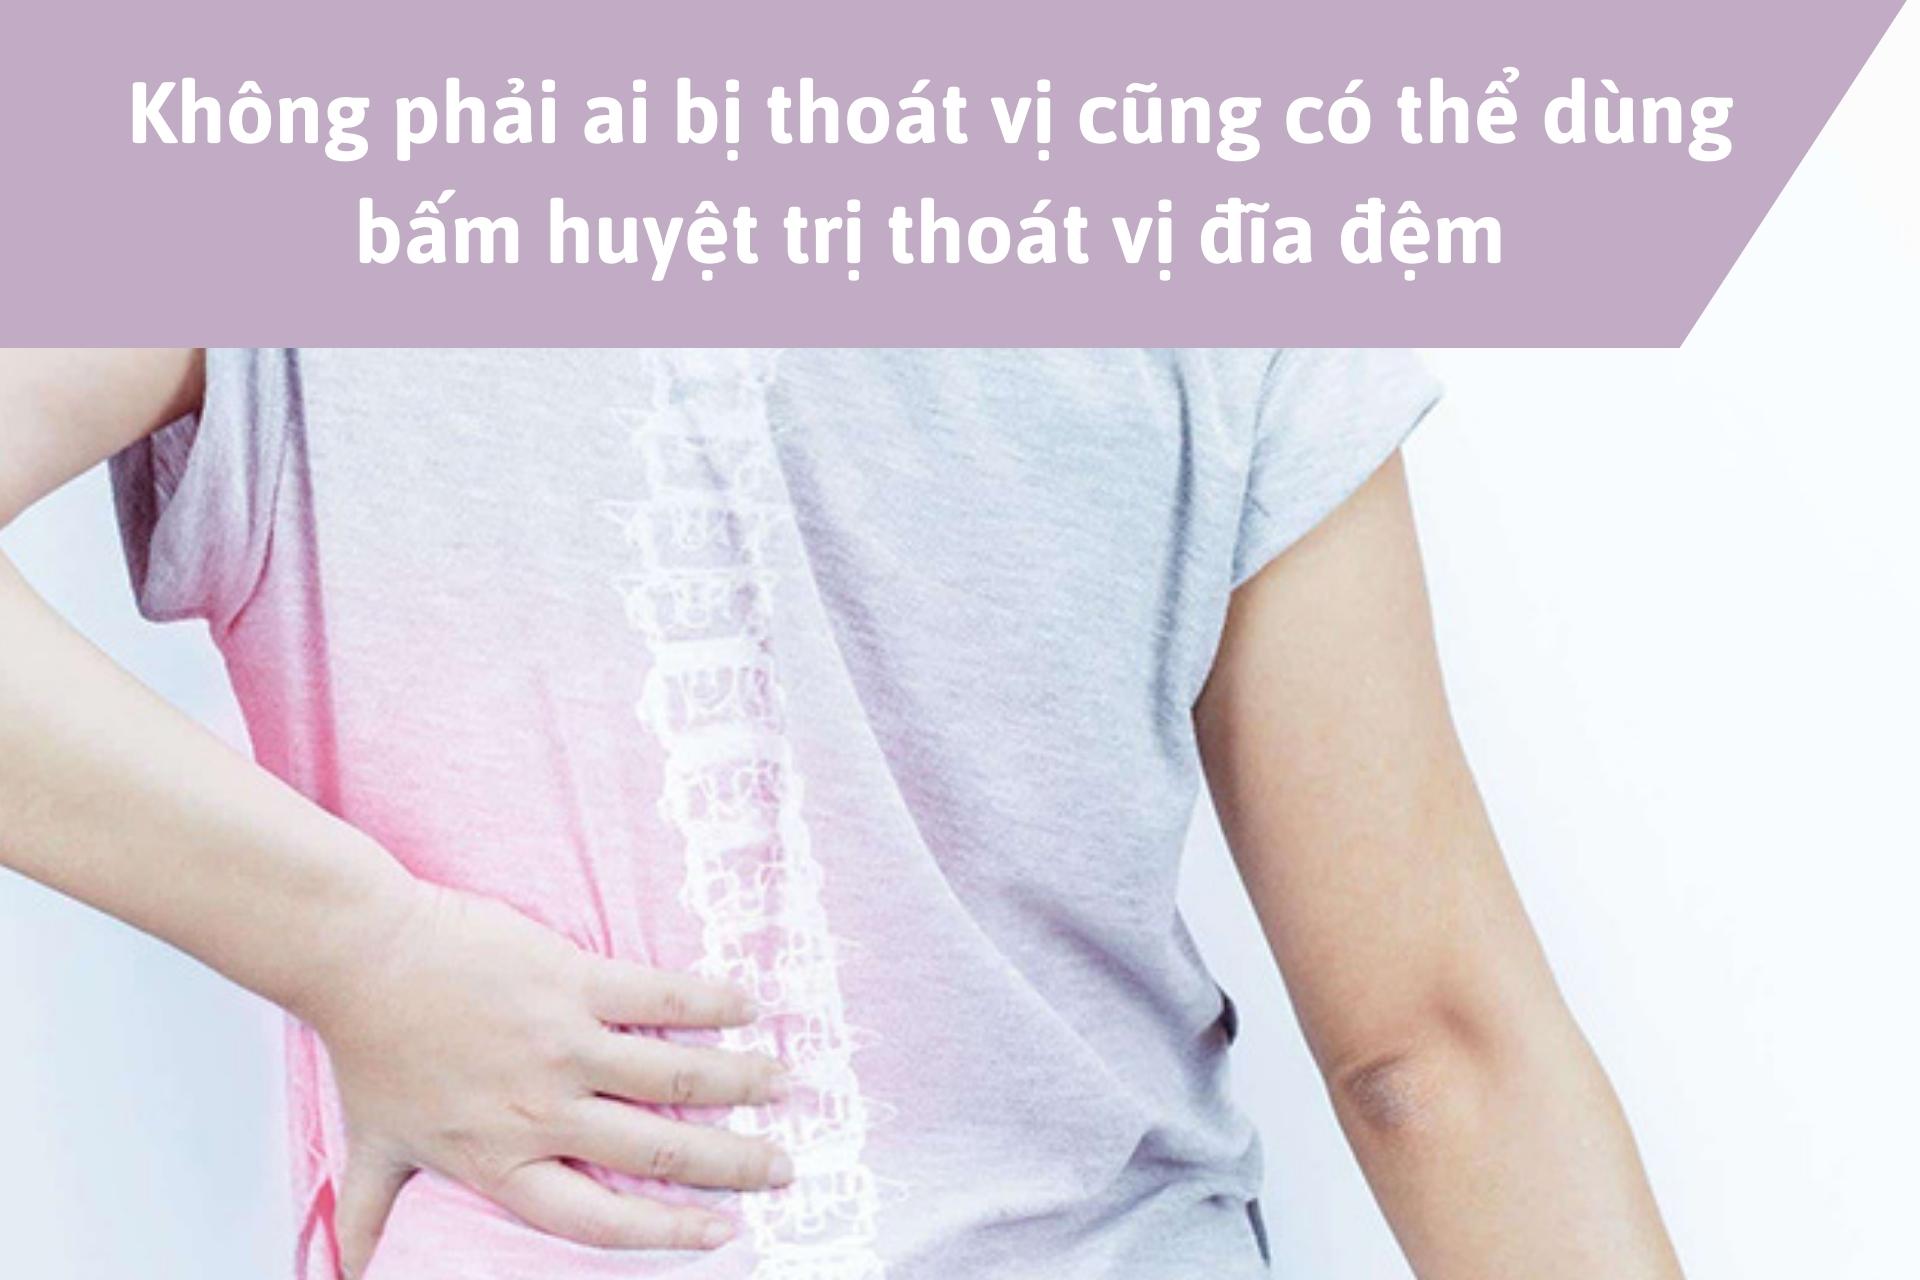 khong-phai-ai-bi-thoat-vi-cung-co-the-dung-bam-huyet-tri-thoat-vi-dia-dem.jpg